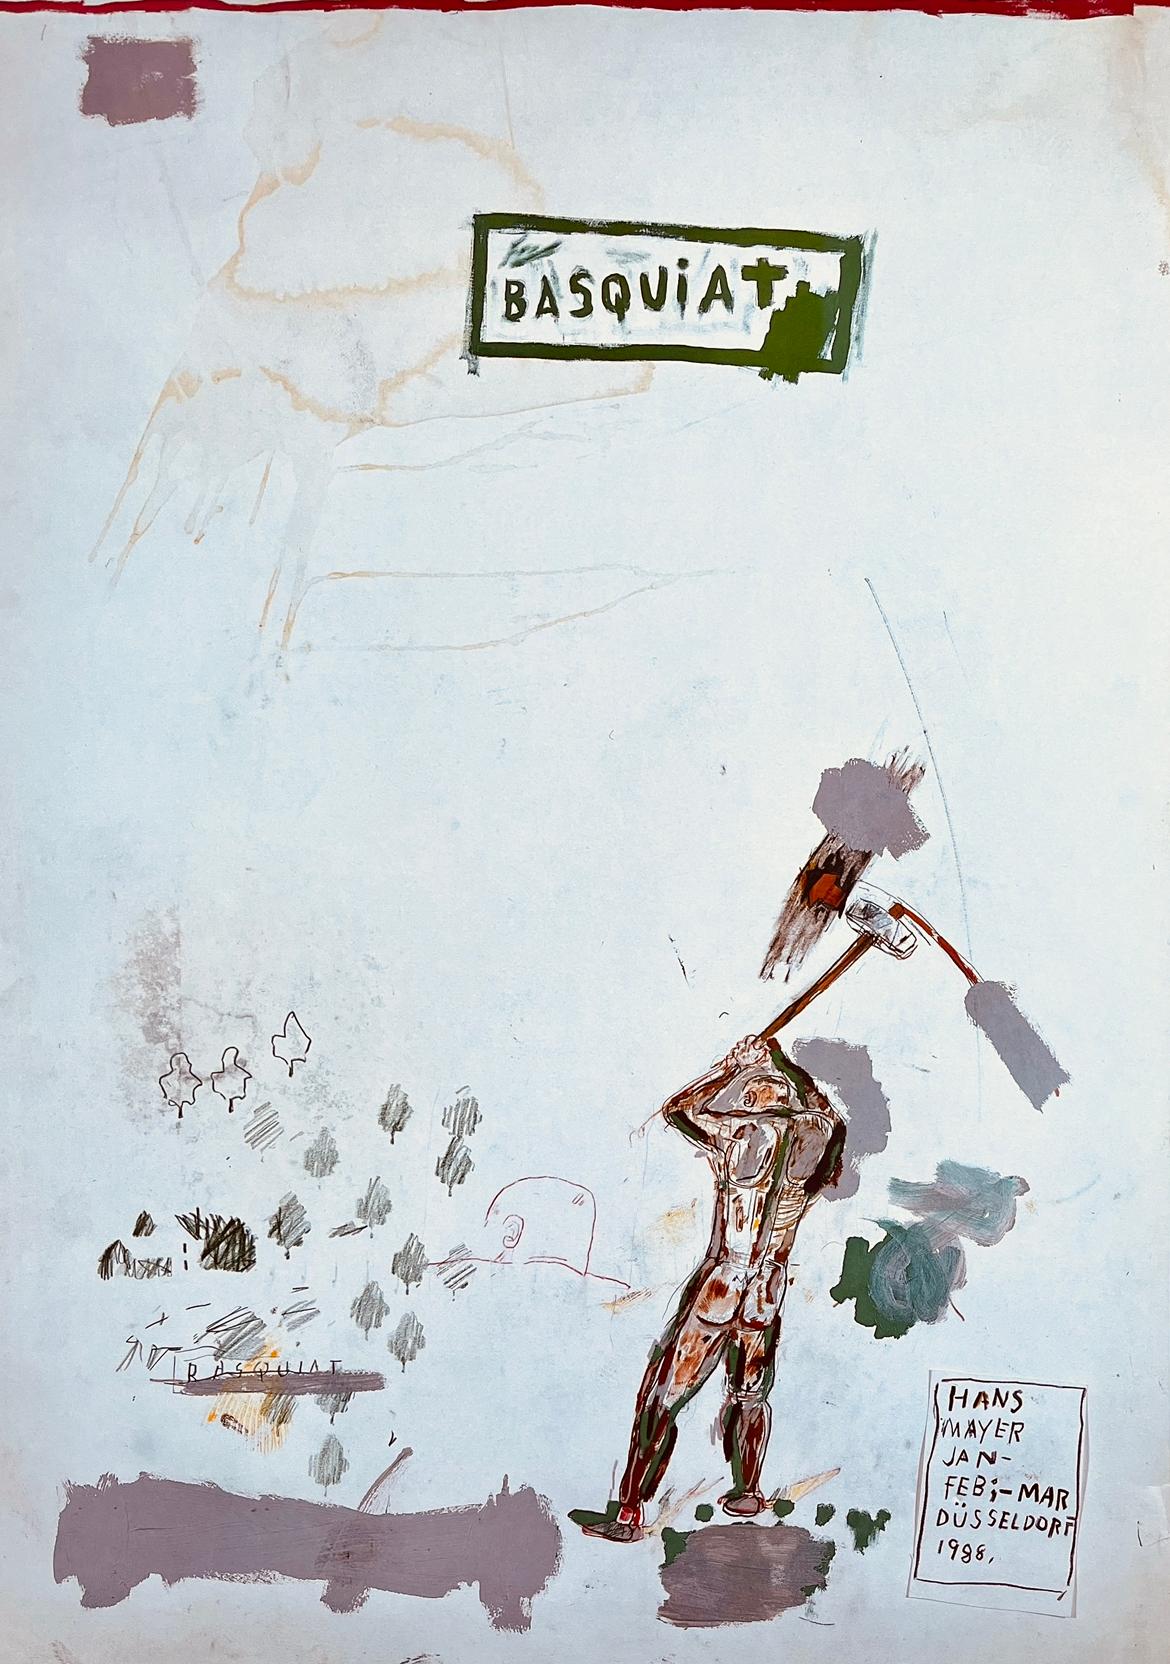 Jean-Michel Basquiat Abstract Print - Basquiat Galerie Hans Mayer 1988 (1980s Basquiat exhibition poster)